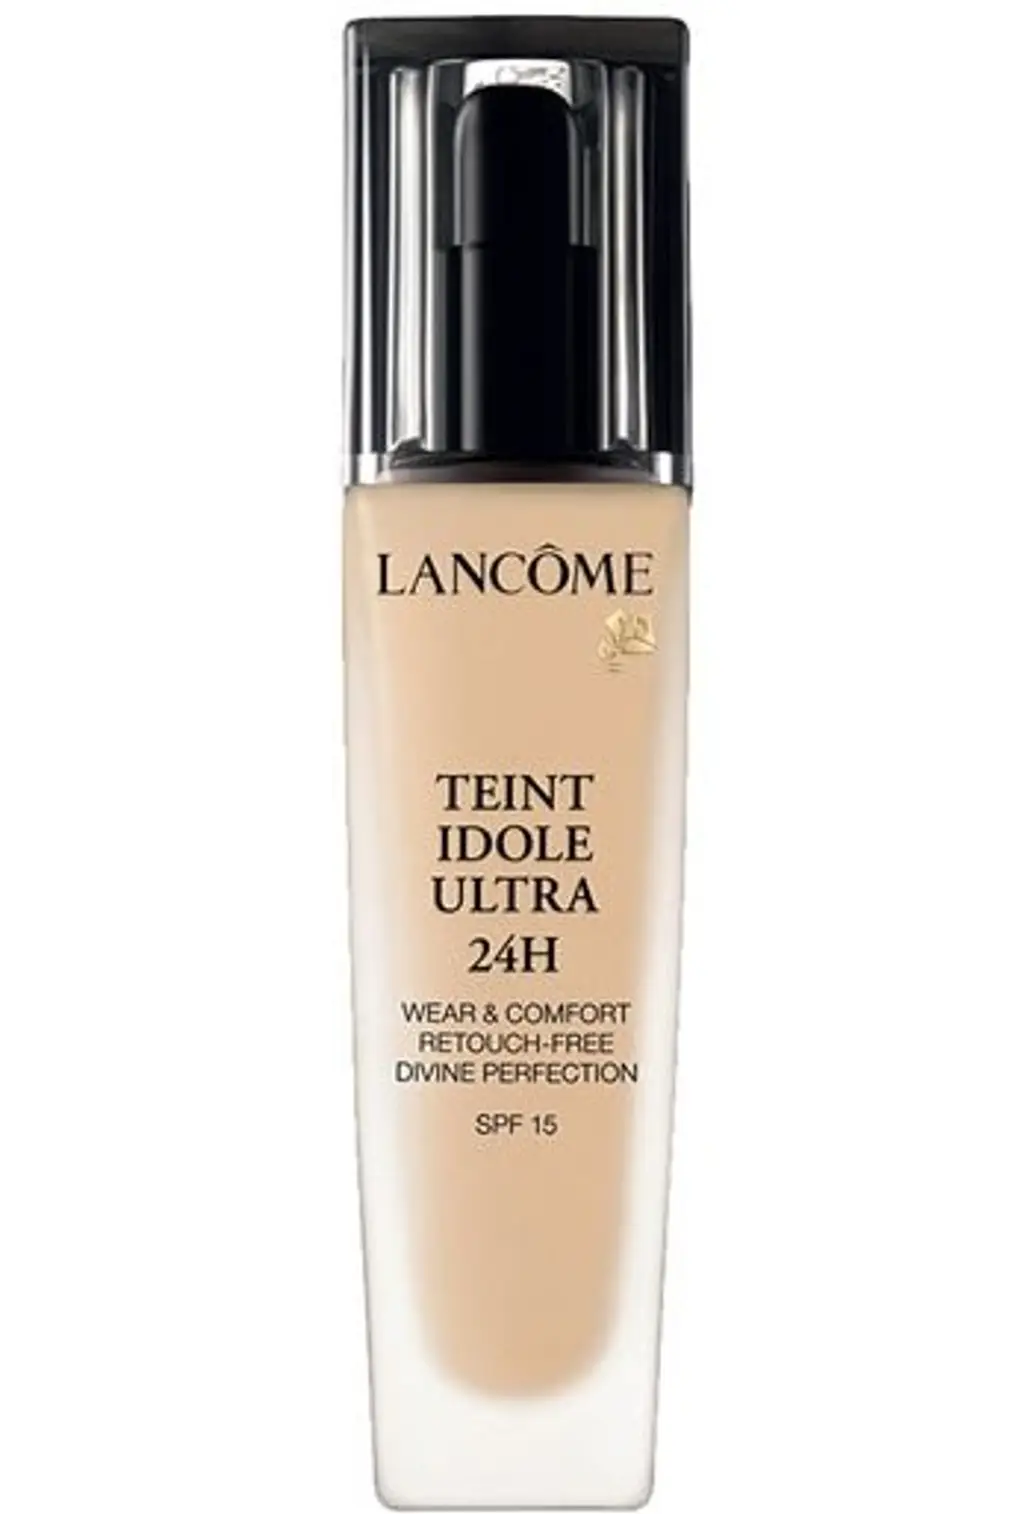 Lancôme Teint Idole Ultra 24H Wear & Comfort Retouch Free Divine Perfection Makeup SPF 15